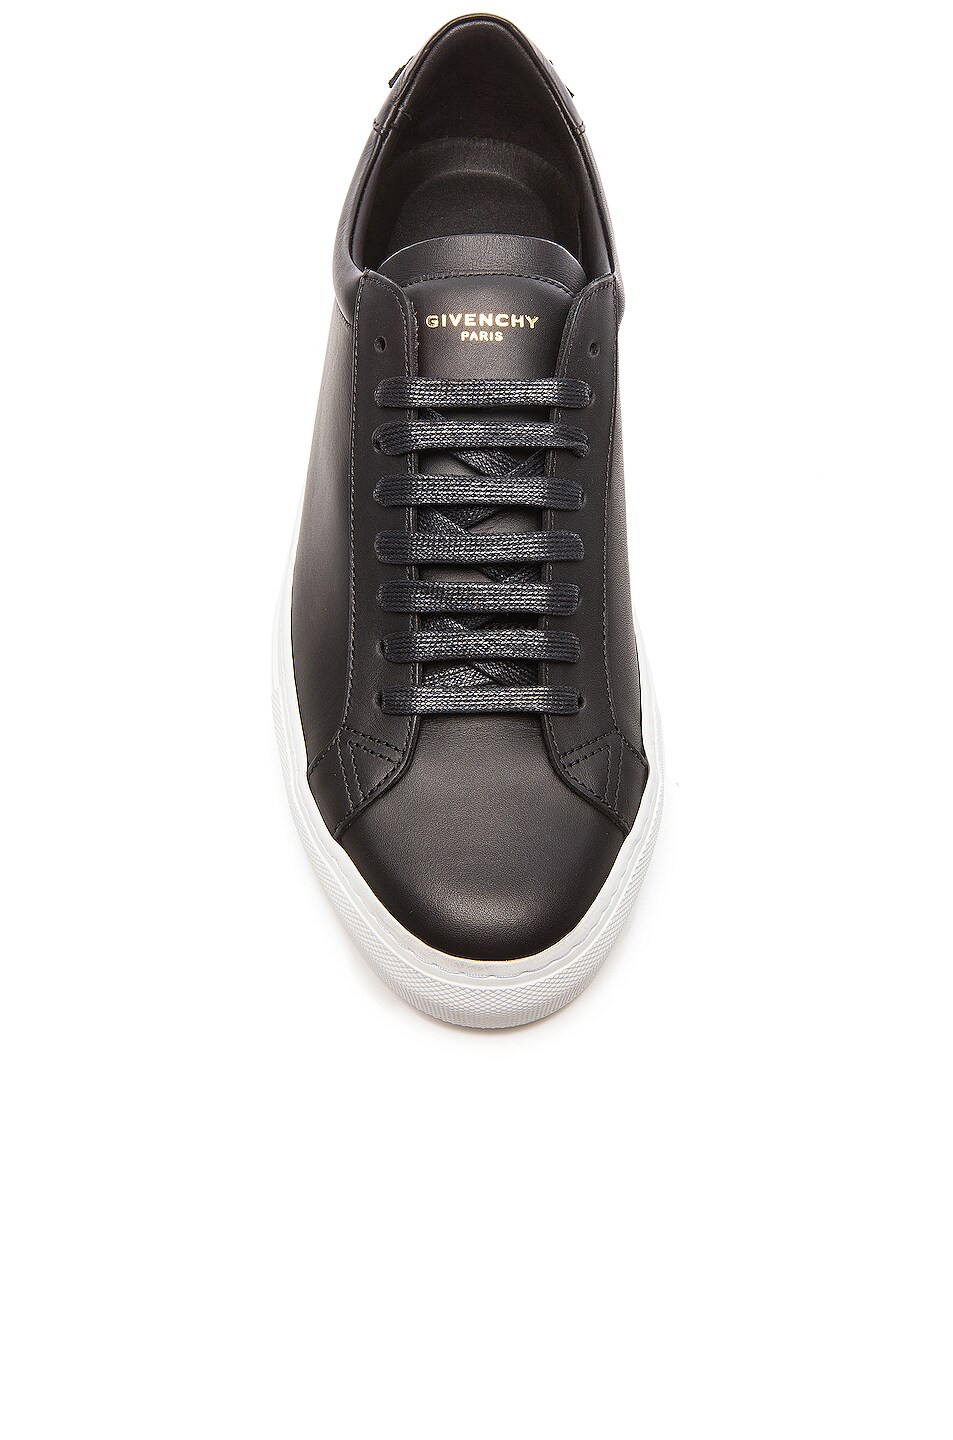 GIVENCHY Urban Street Leather Tennis Sneakers, Black | ModeSens